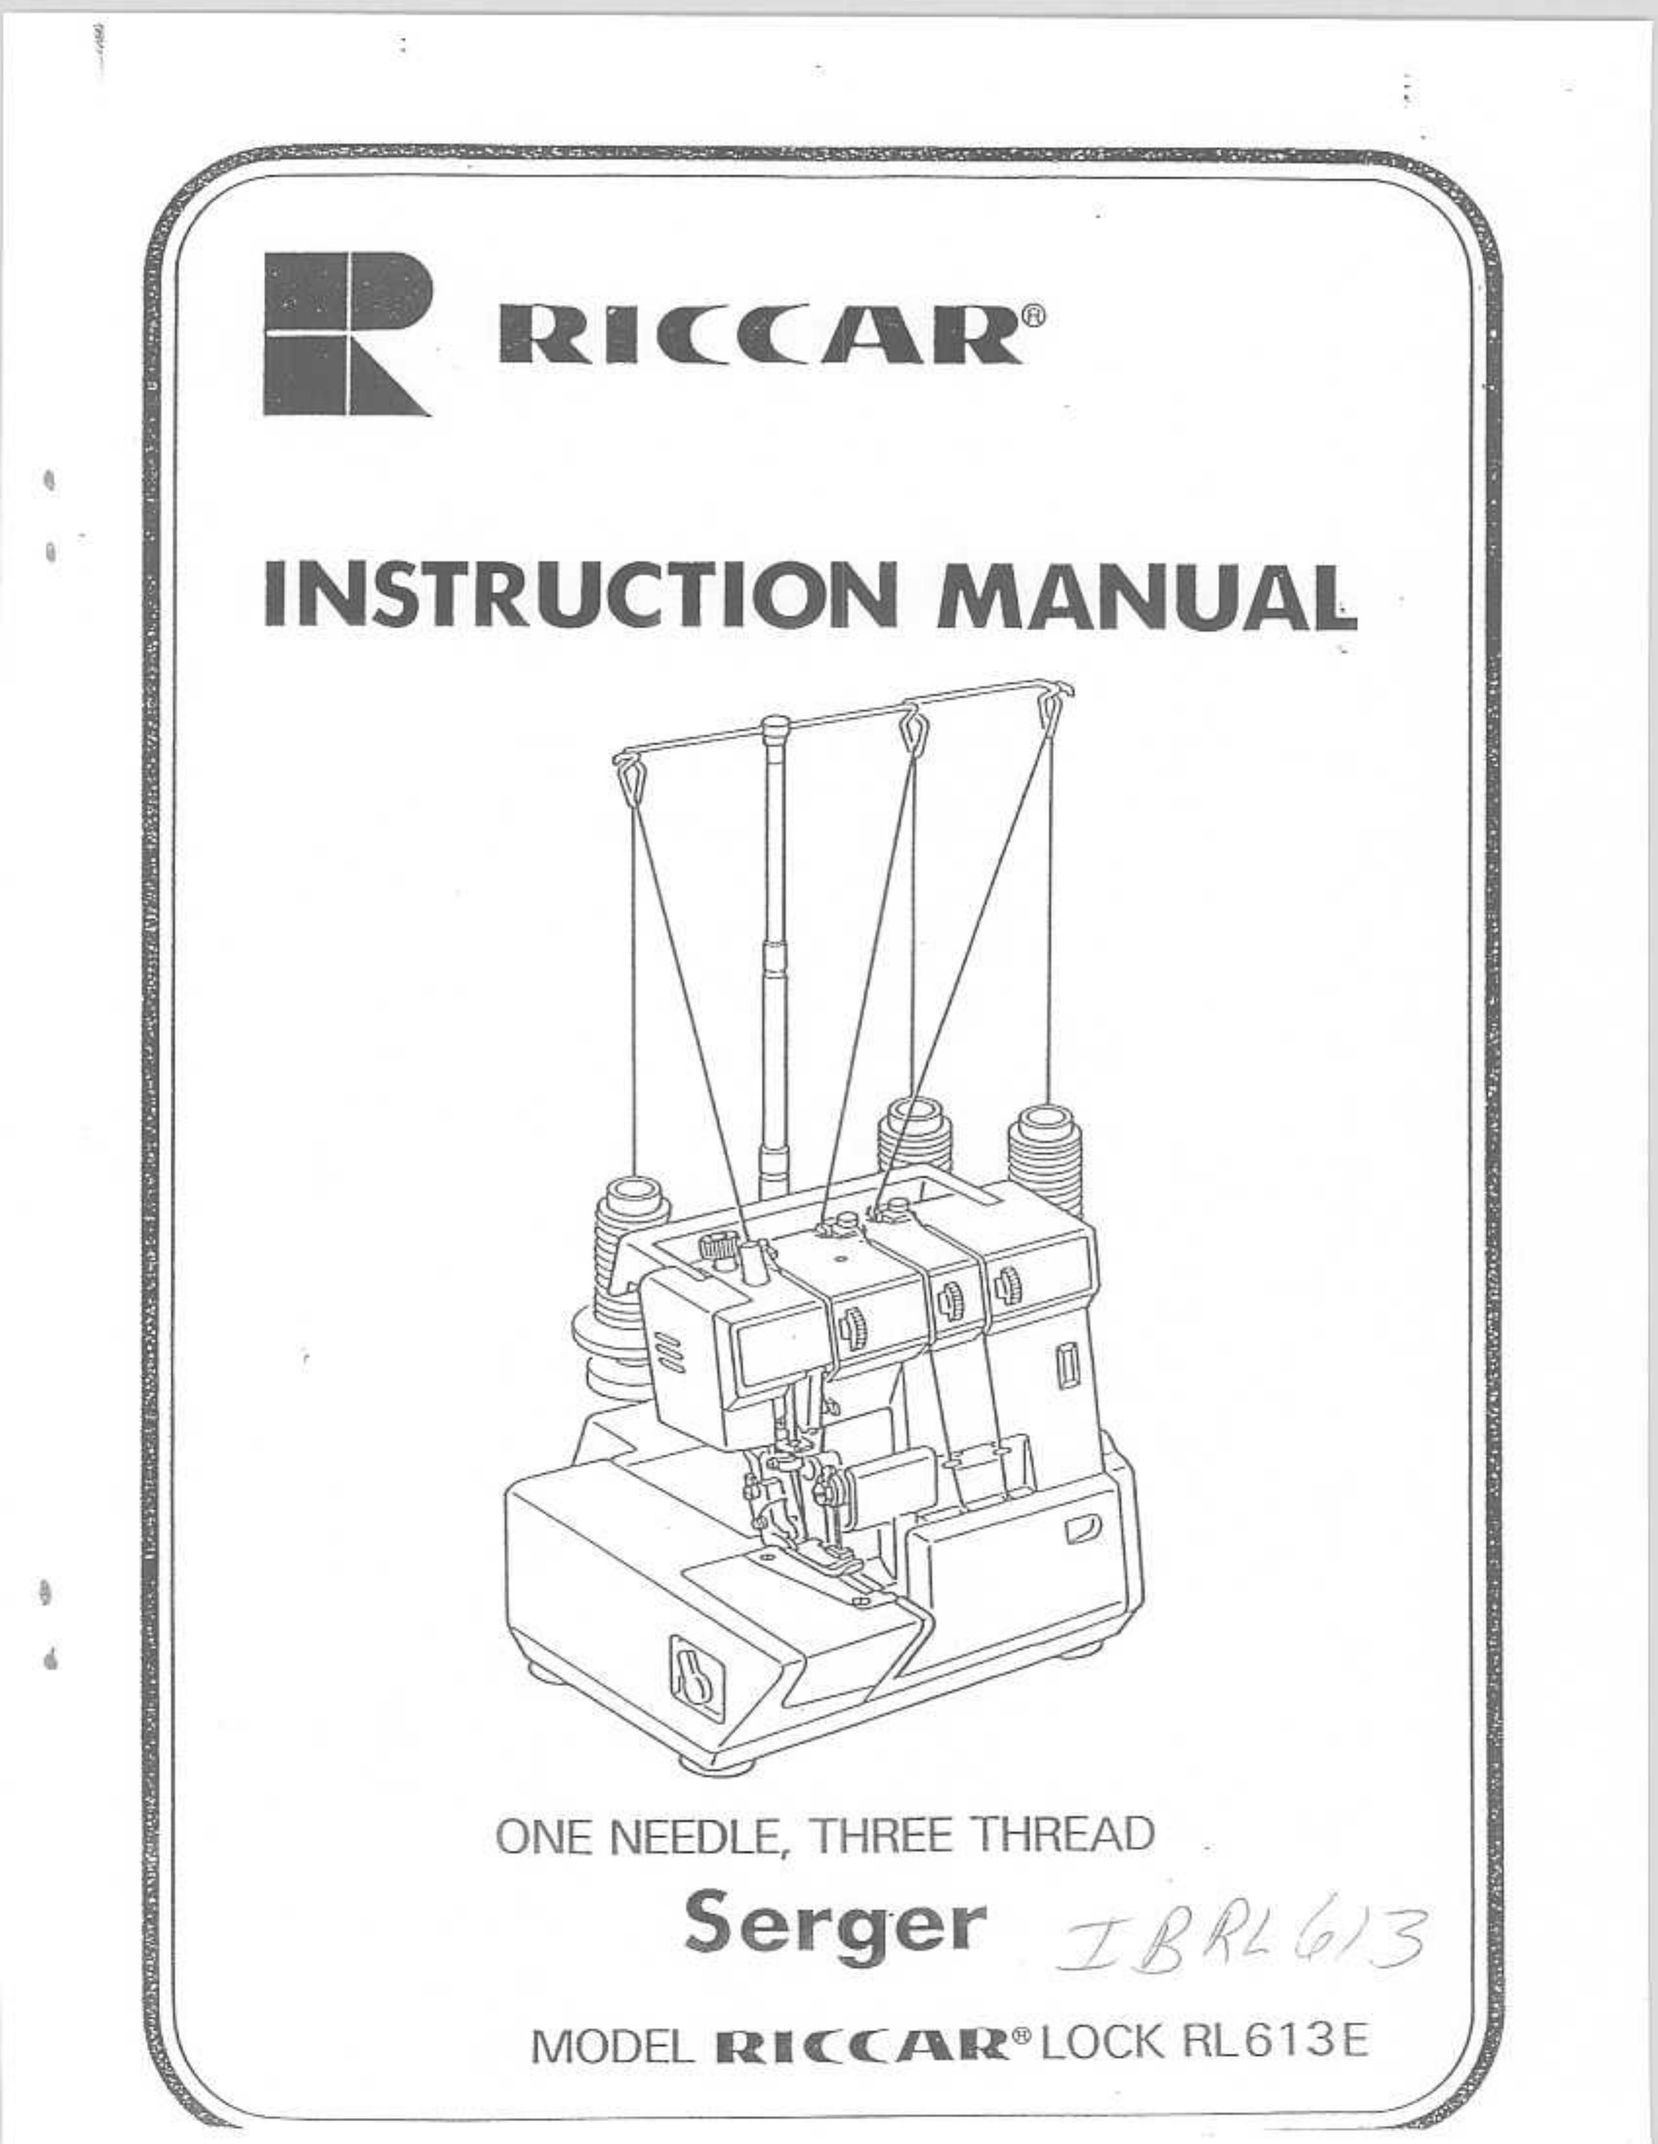 Riccar IBRL613 Sewing Machine User Manual